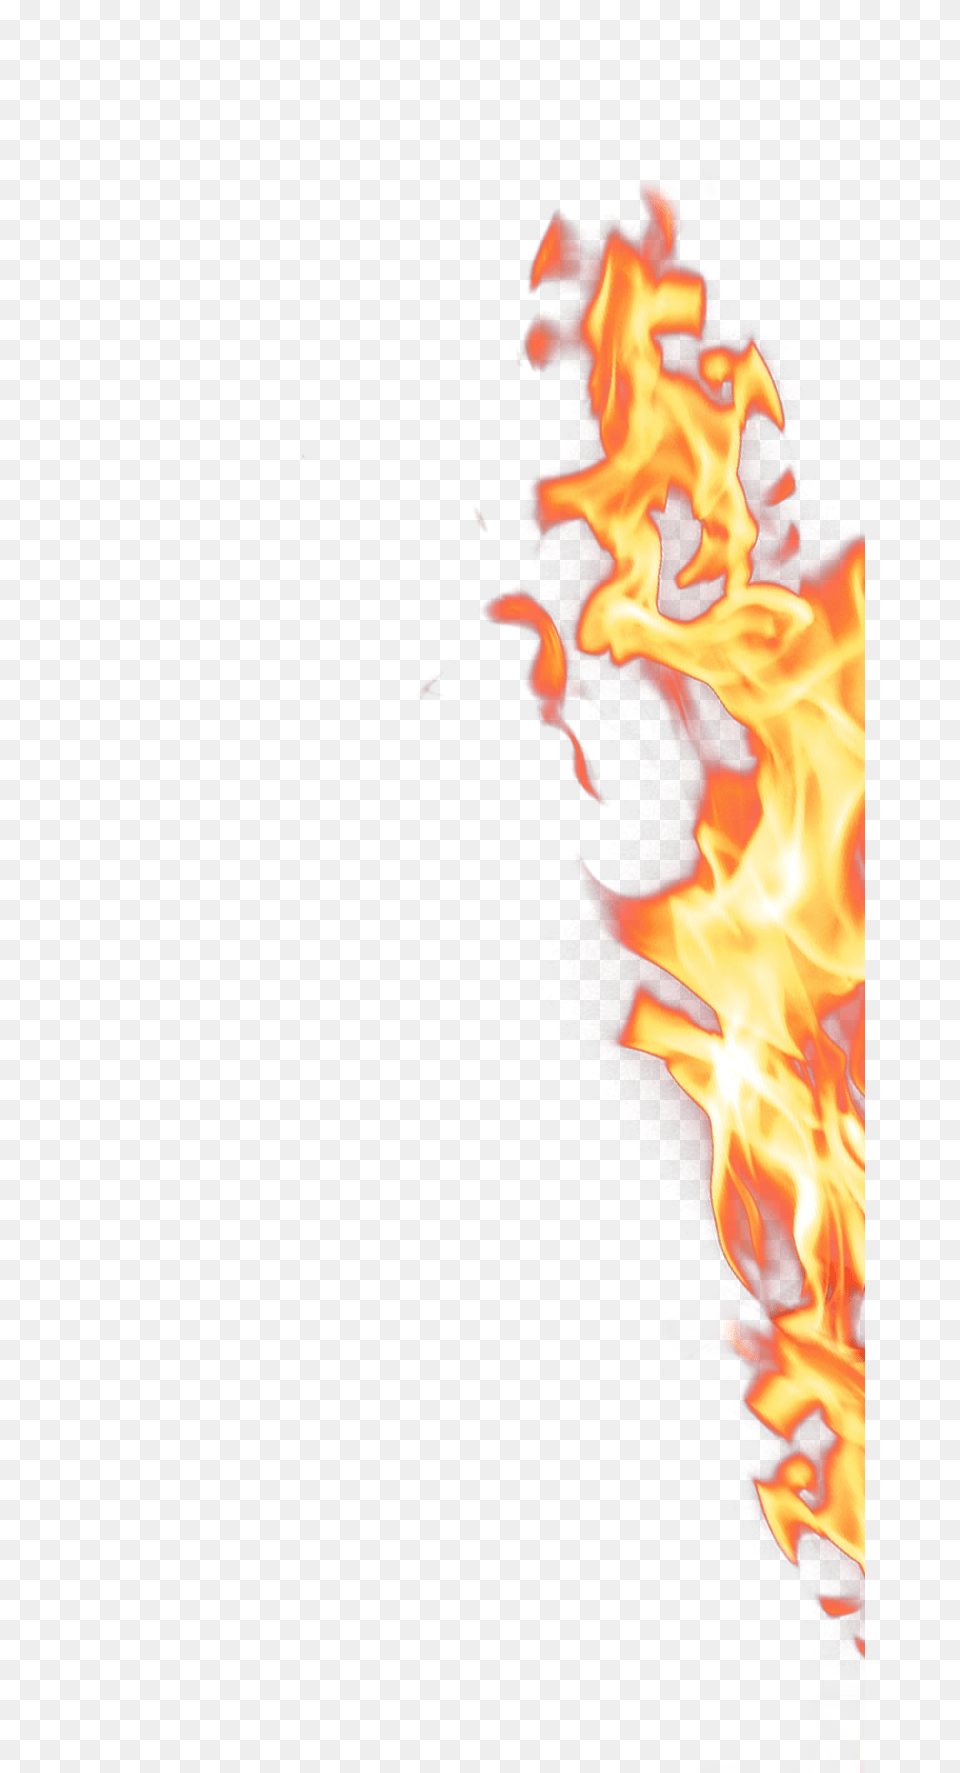 Fire Dragons, Flame, Bonfire Png Image